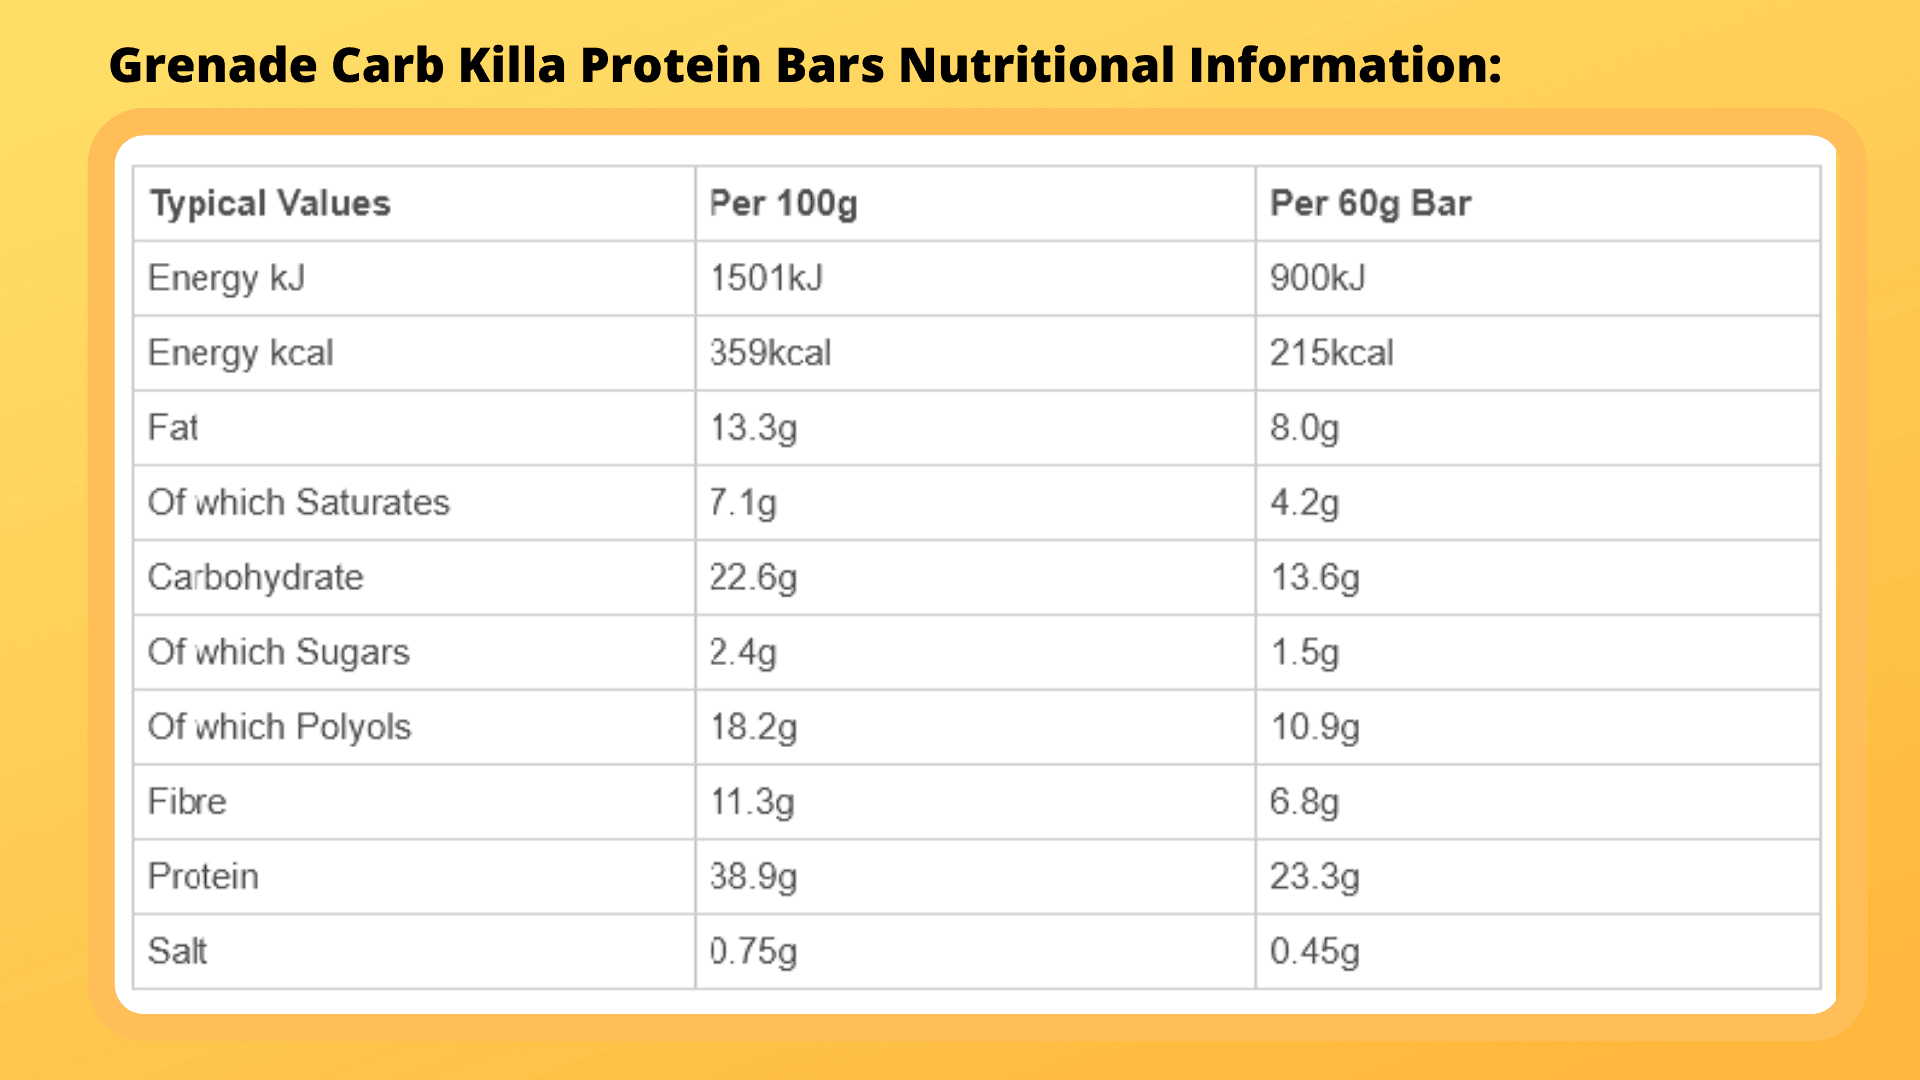 Grenade carb killa bars nutritional information table 